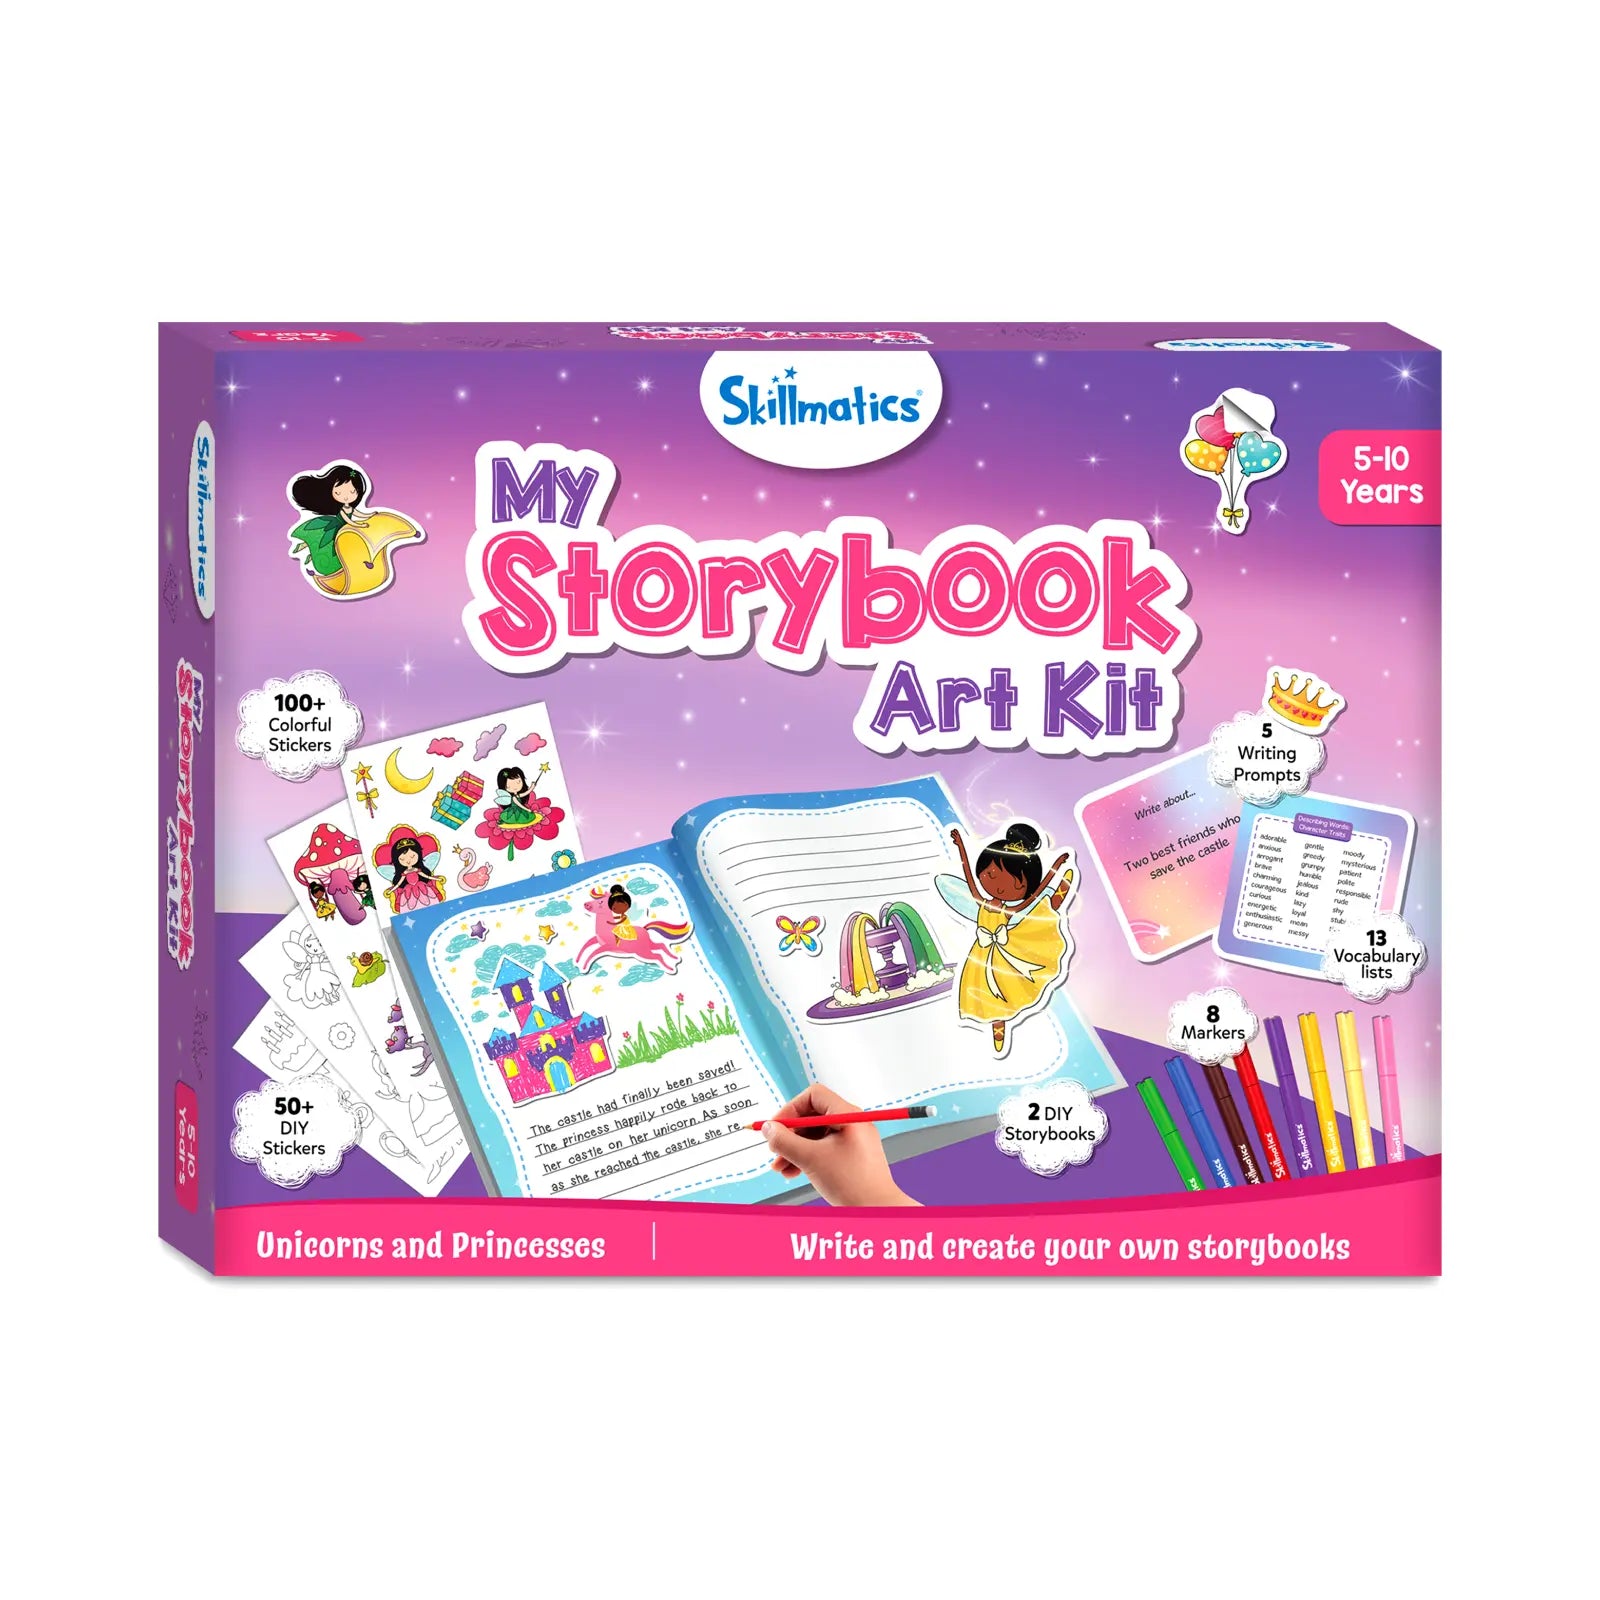 My Storybook Art Kit - Unicorns & Princesses (ages 5-10)